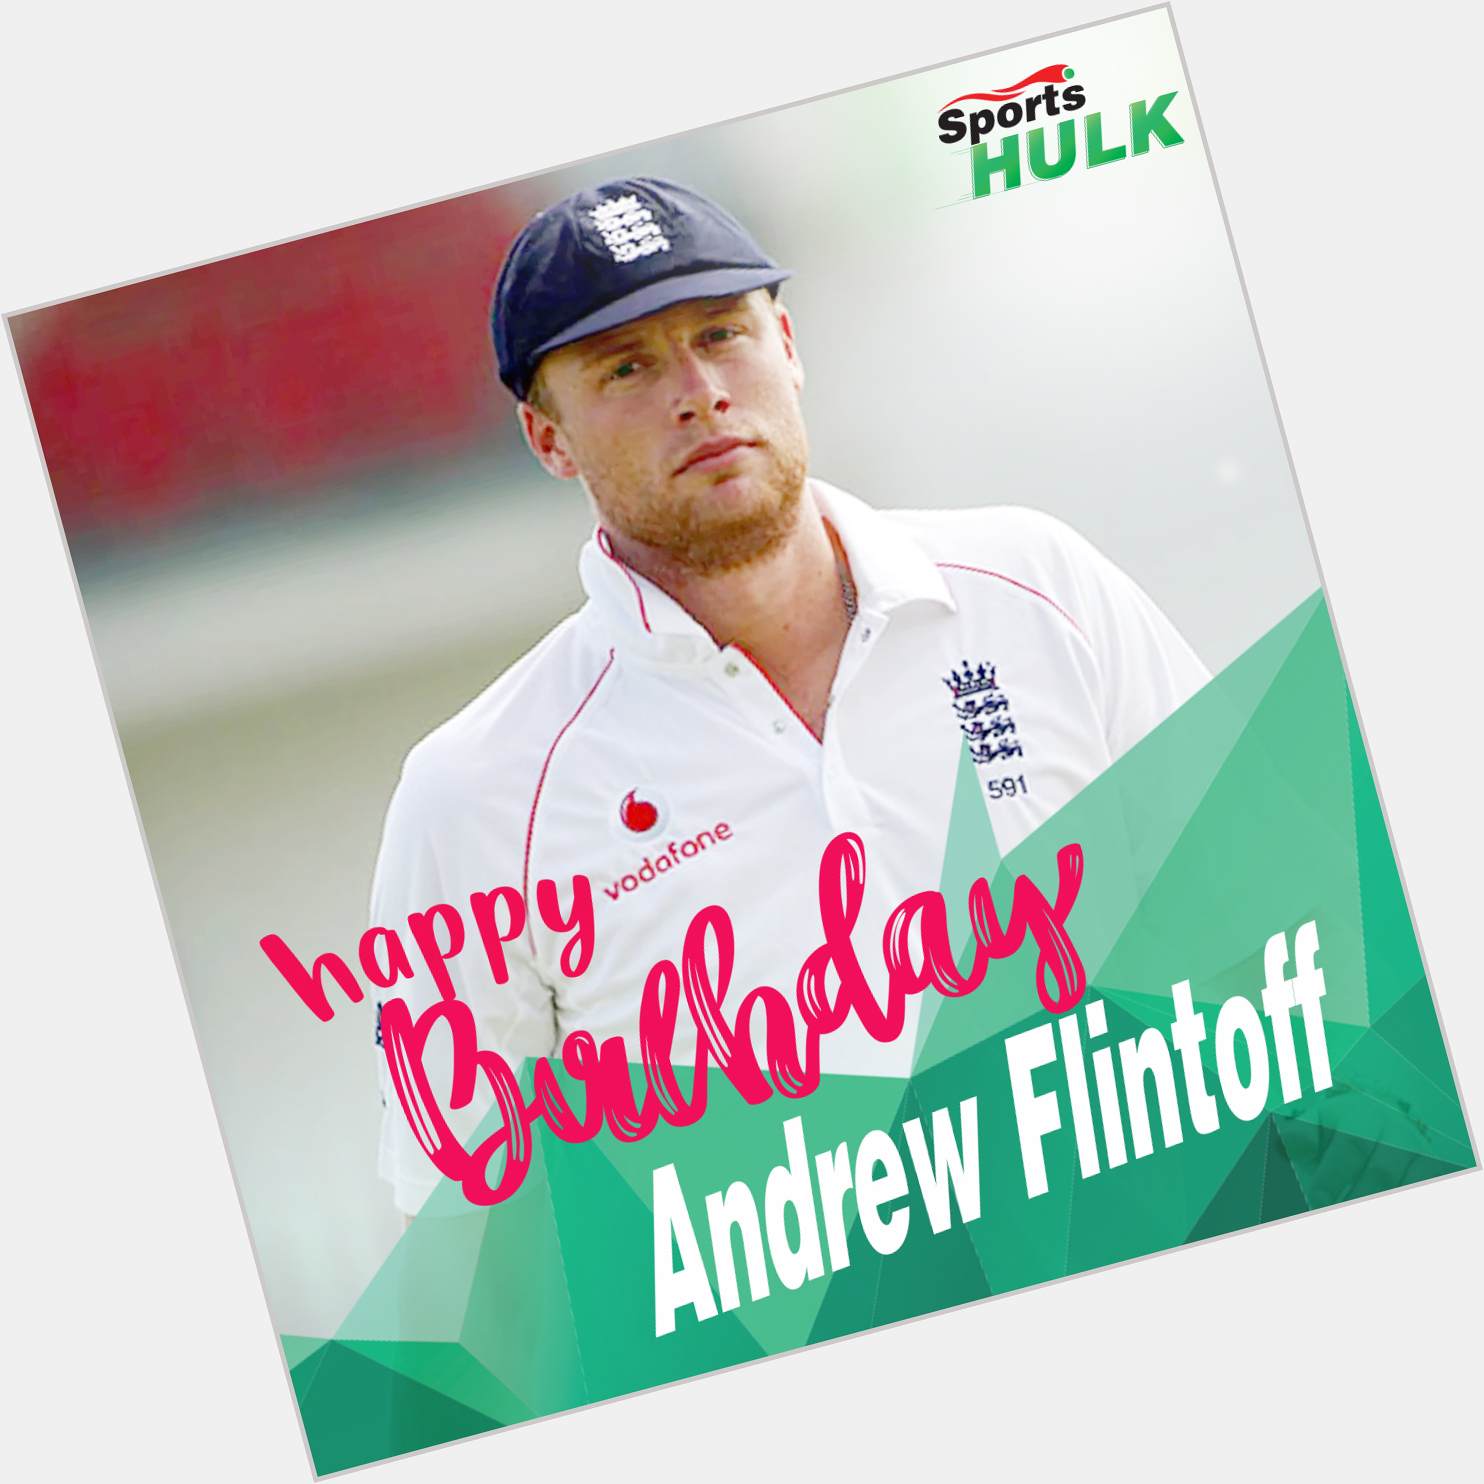  Happy birthday Andrew Flintoff! 